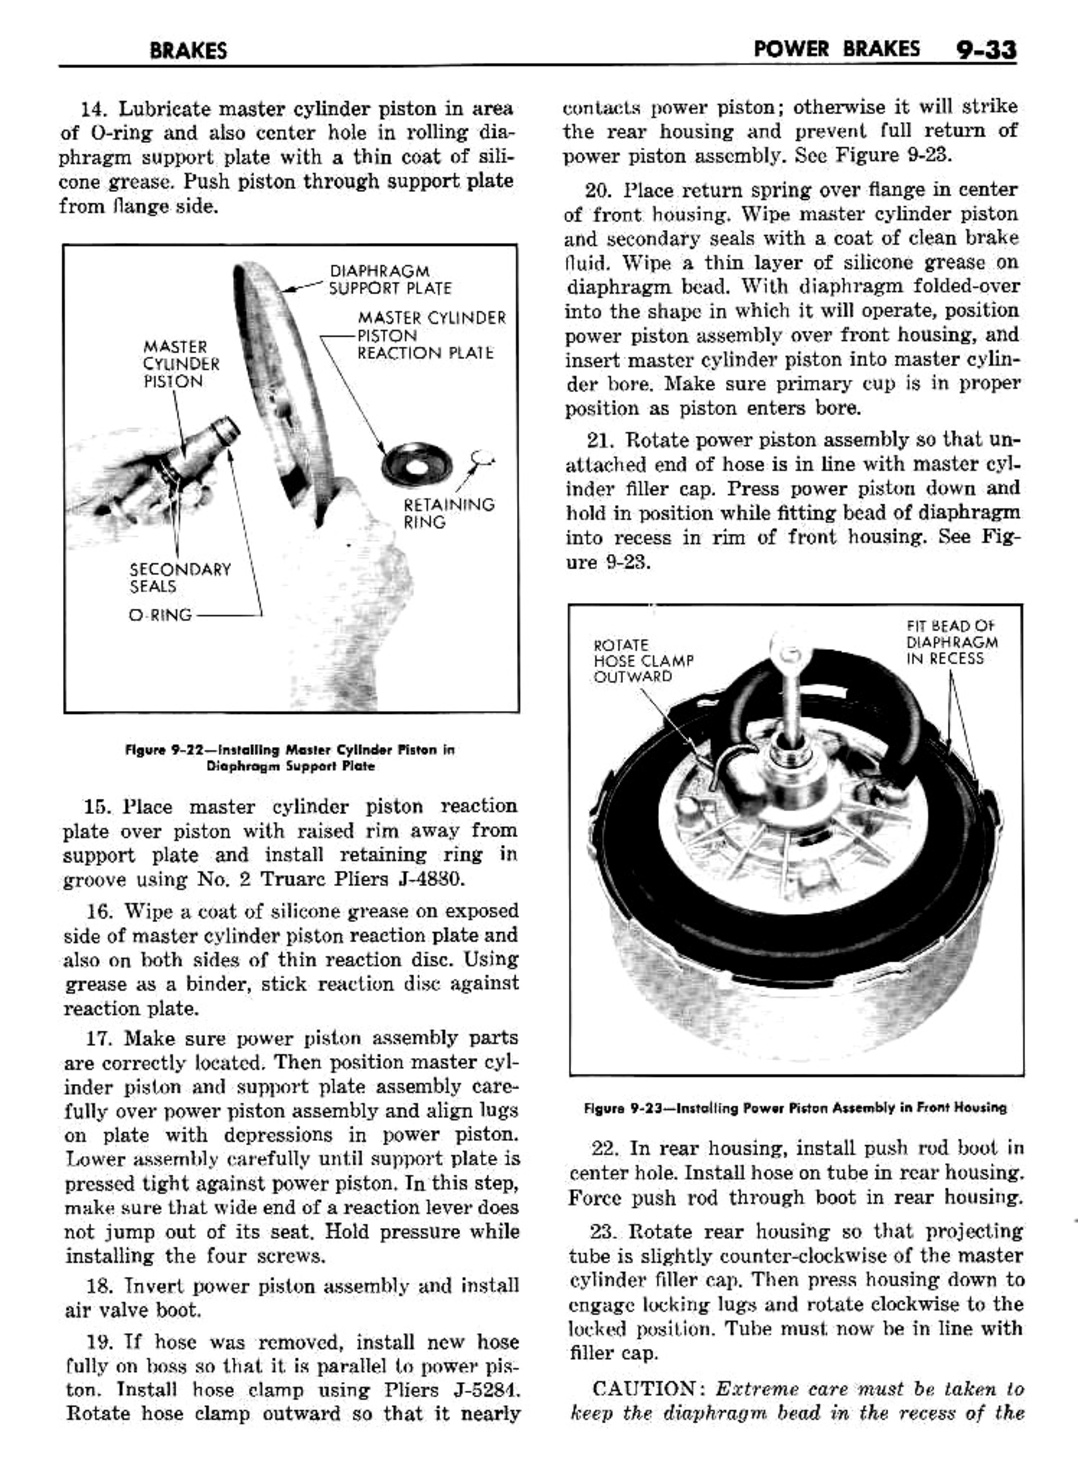 n_10 1960 Buick Shop Manual - Brakes-033-033.jpg